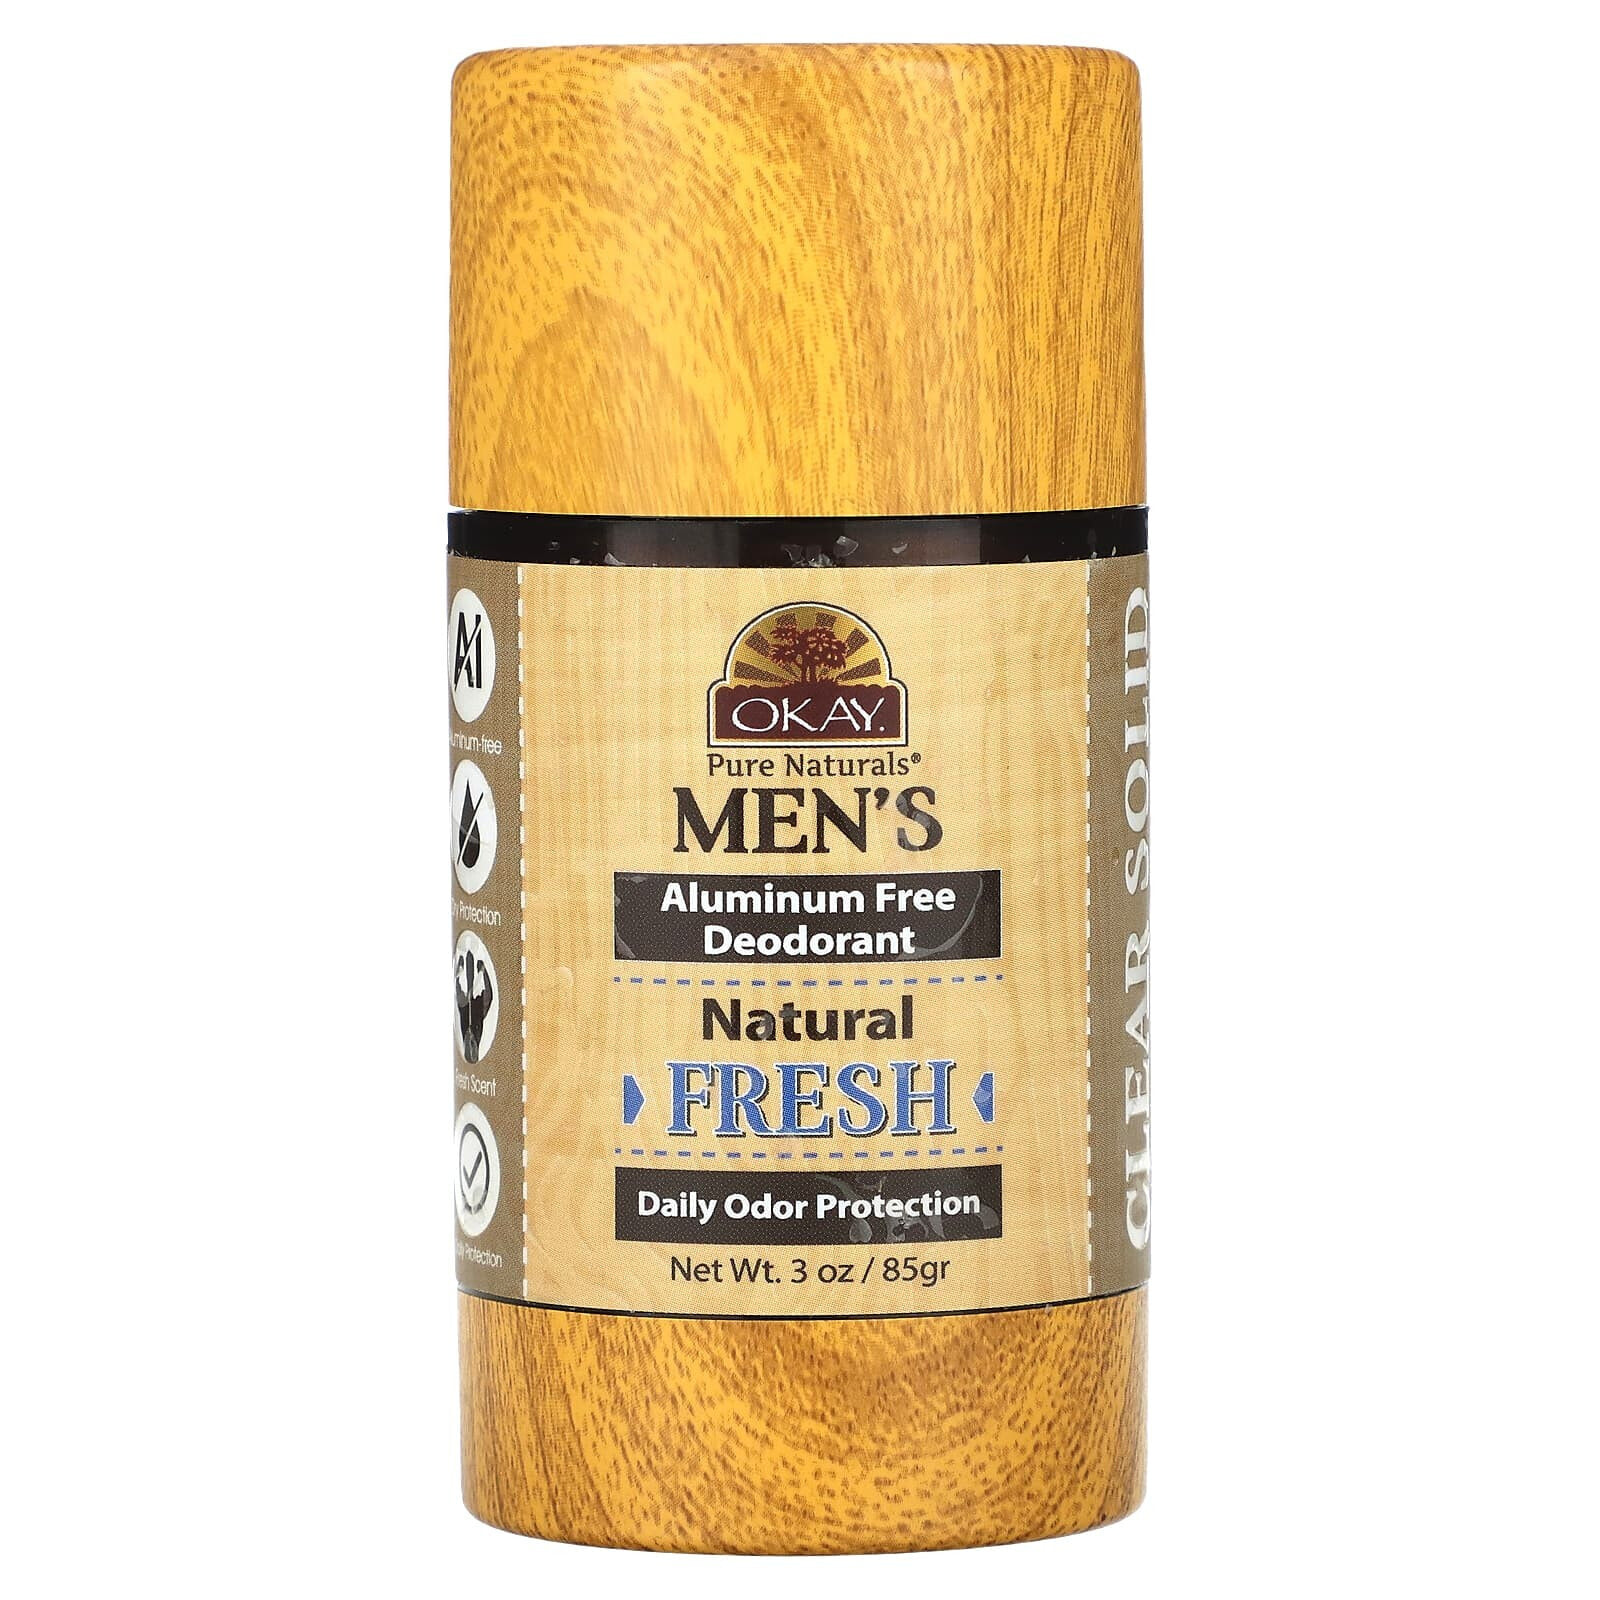 Men's Aluminum Free Deodorant, Natural Fresh, 3 oz (85 g)